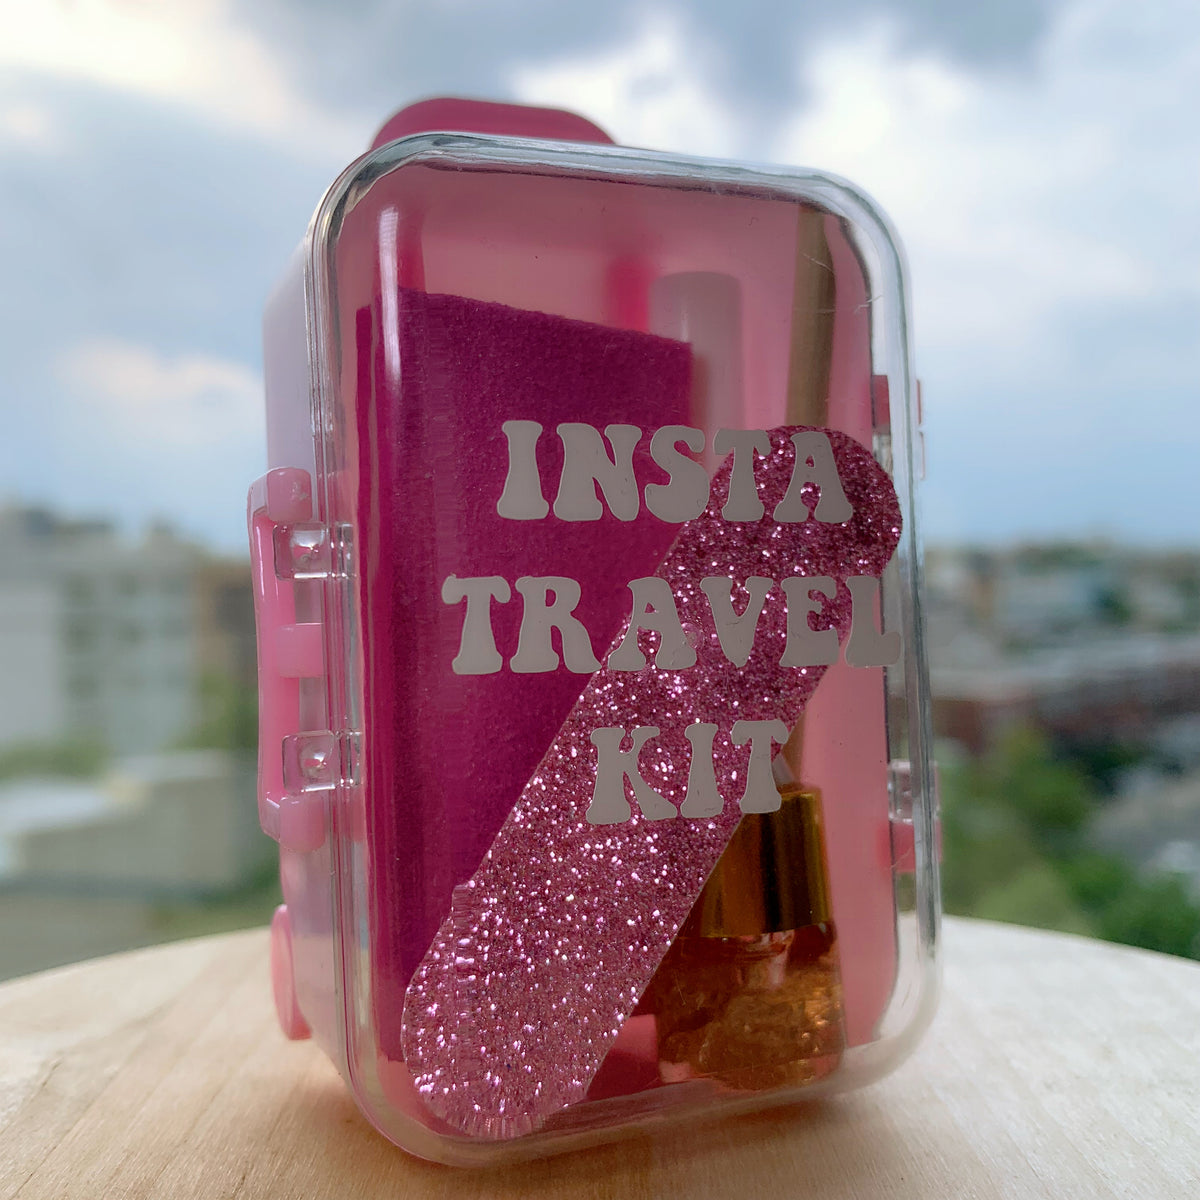 Insta Travel Kit